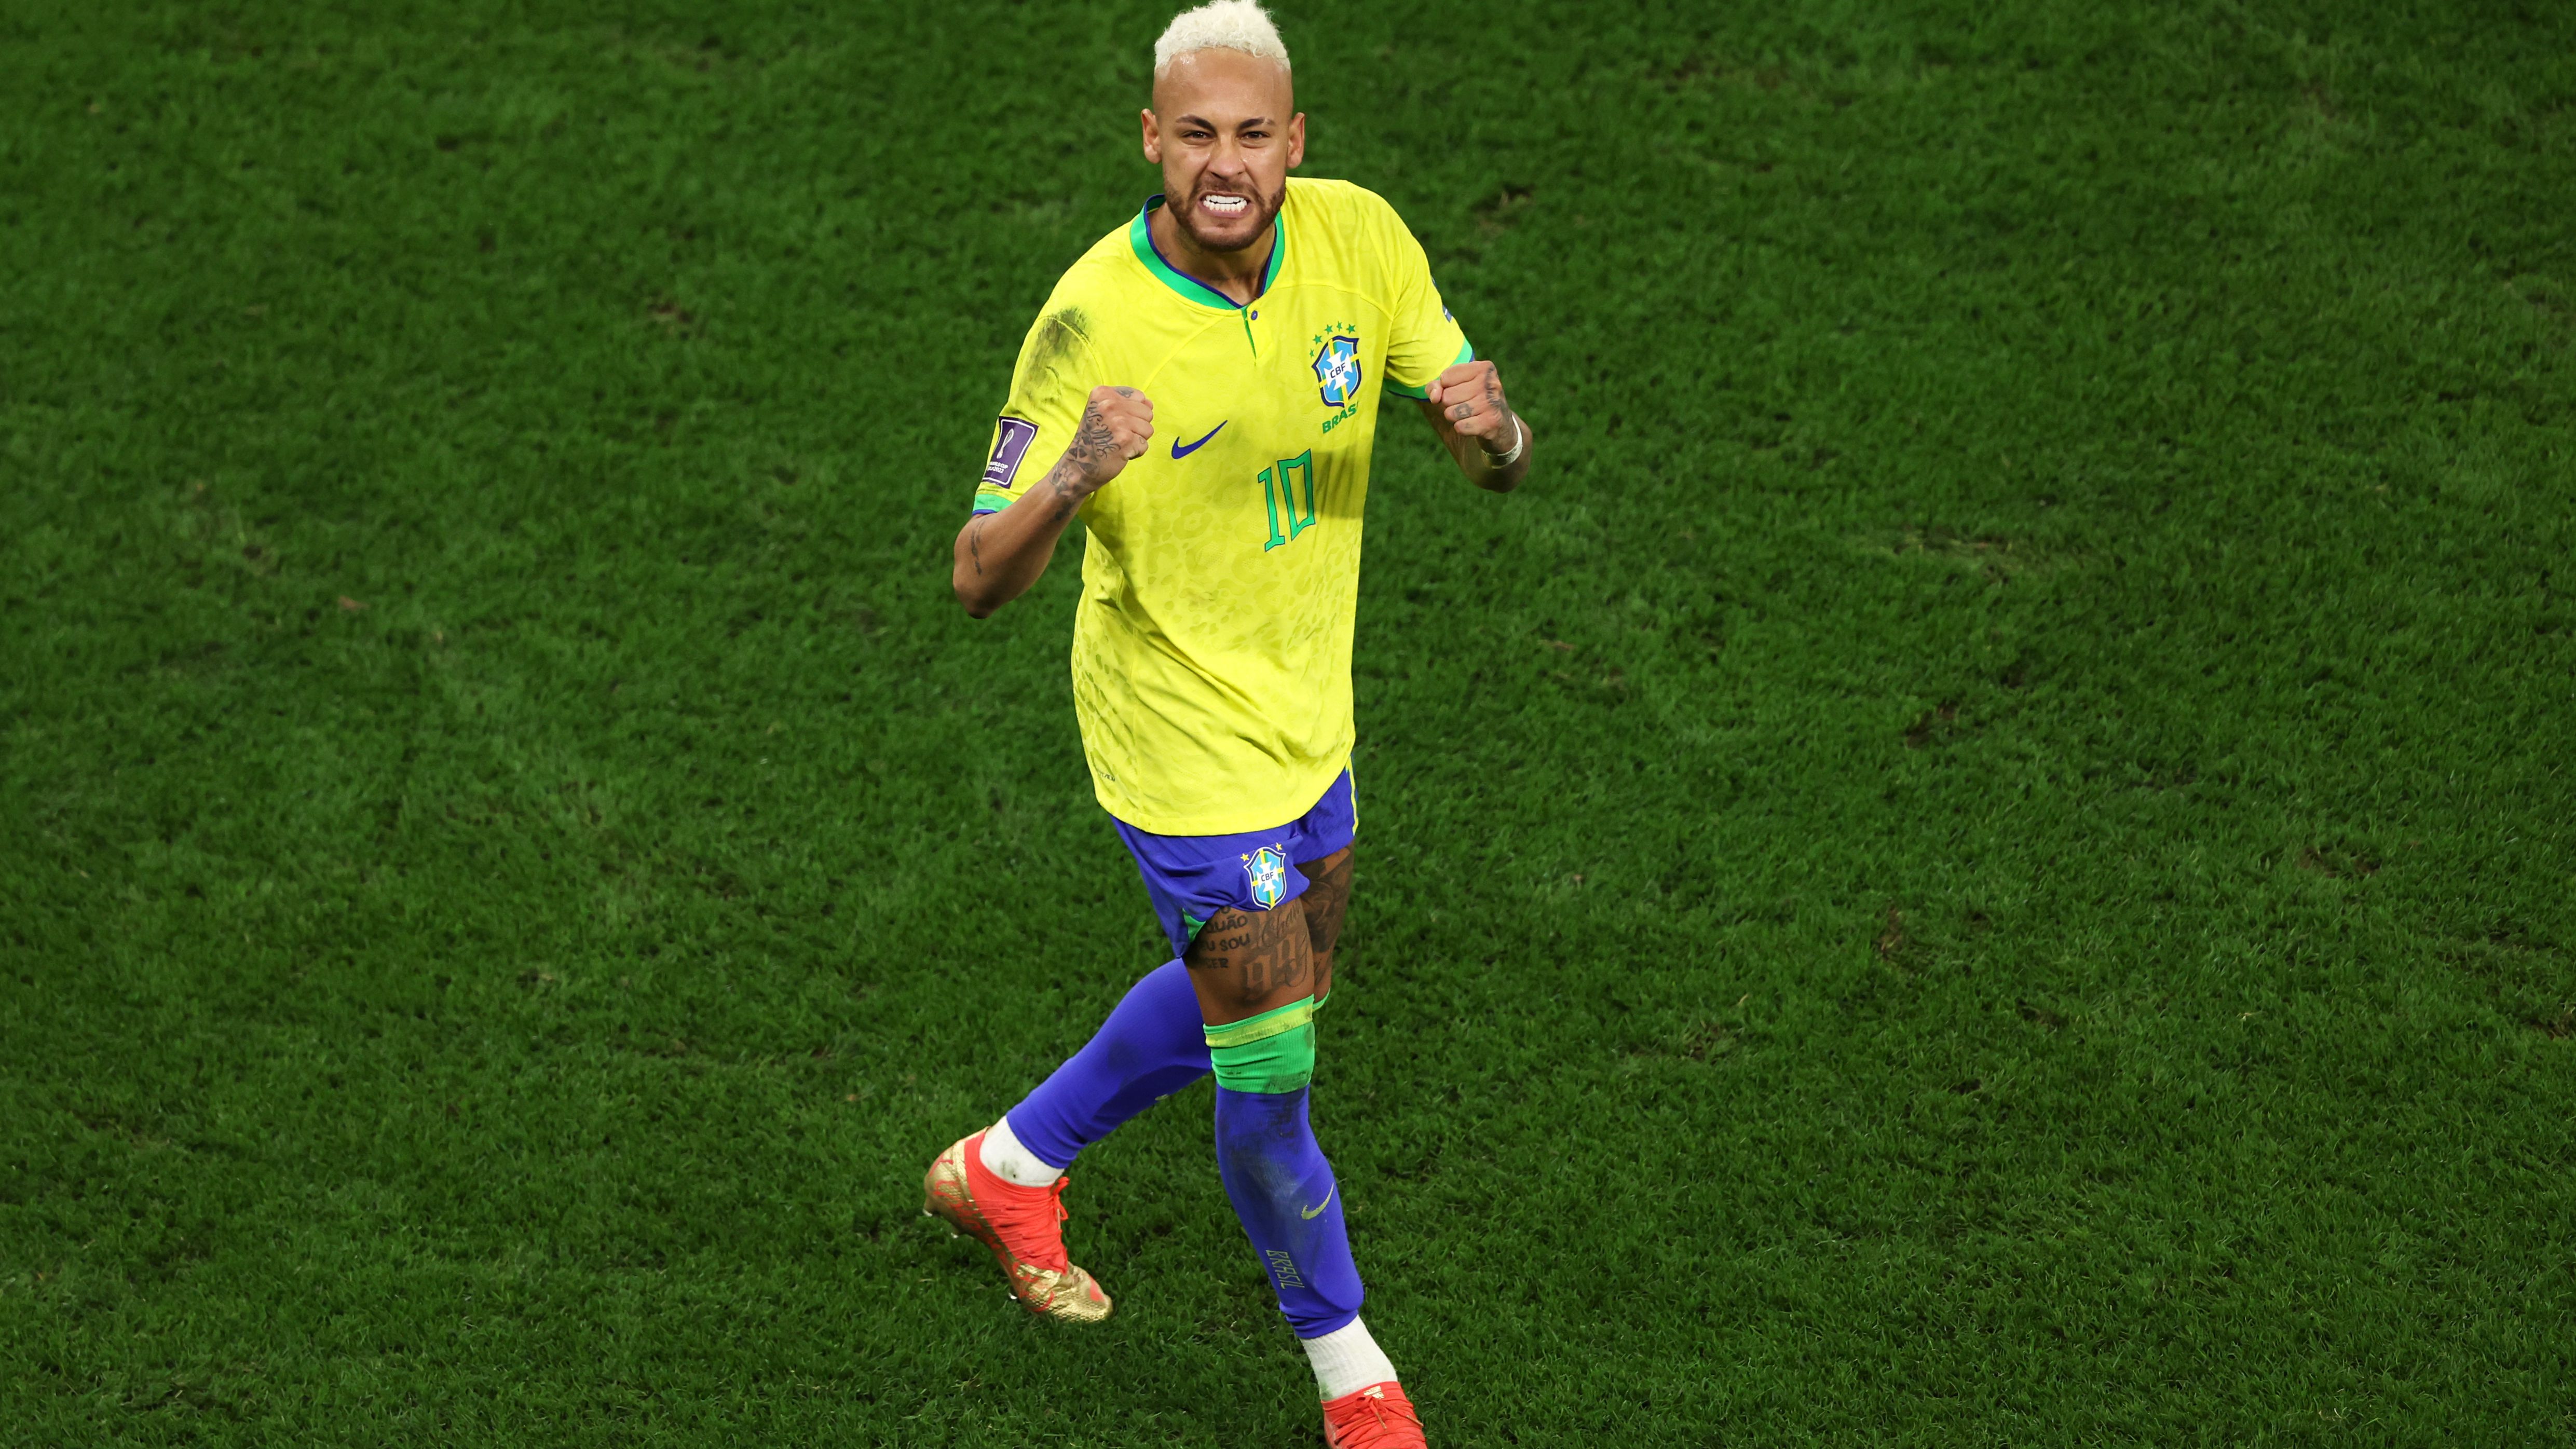 Neymar fez dois gols nesta Copa do Mundo